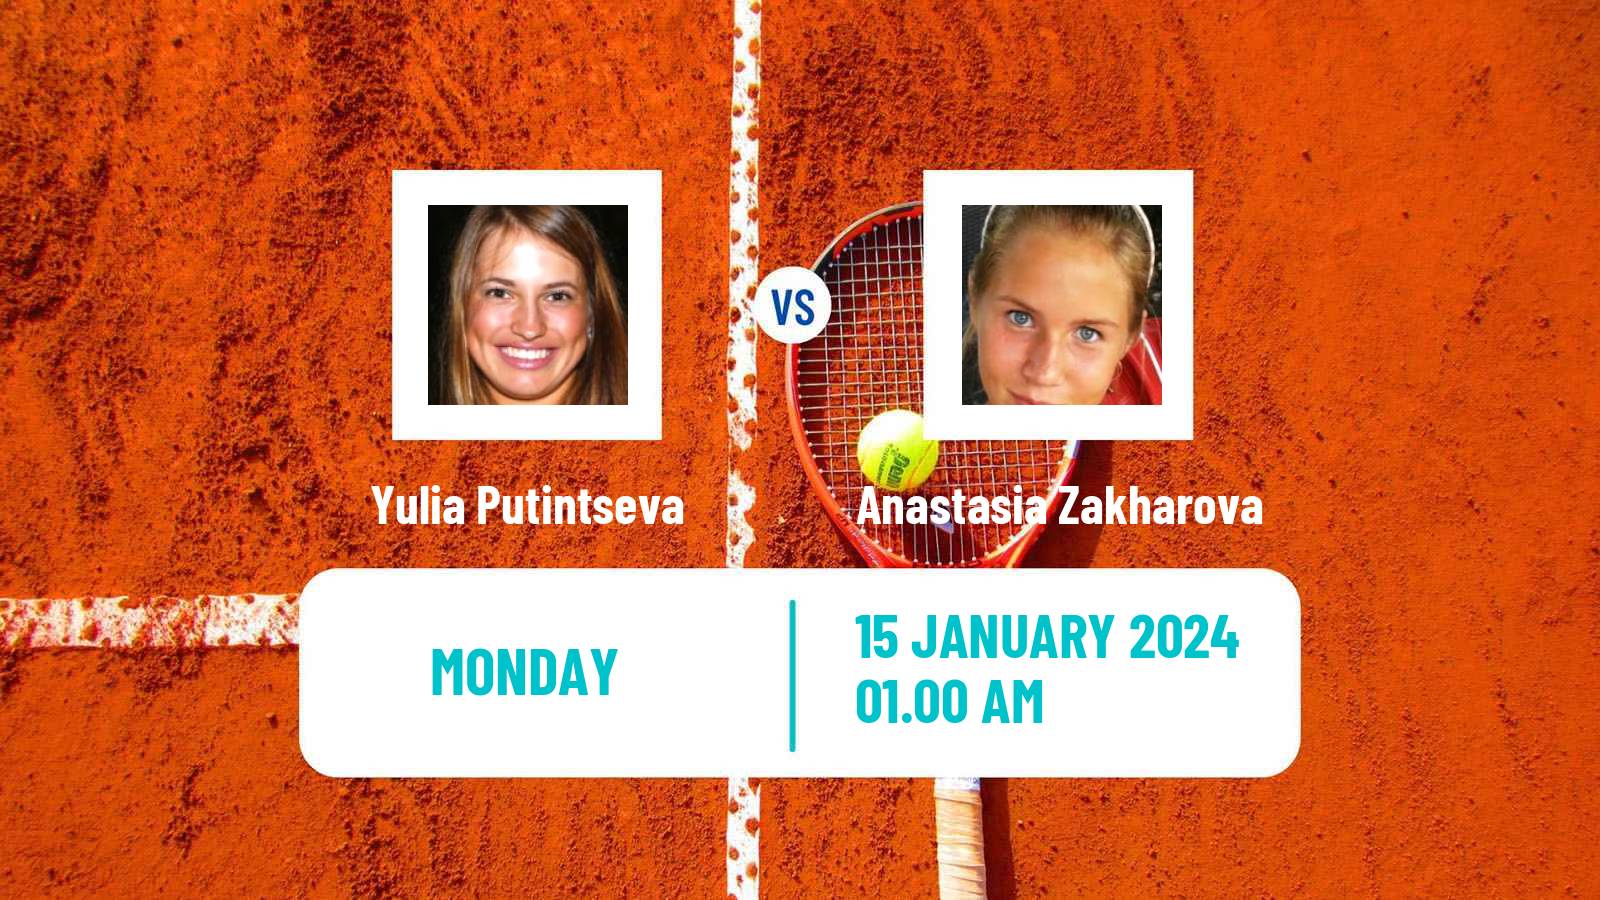 Tennis WTA Australian Open Yulia Putintseva - Anastasia Zakharova